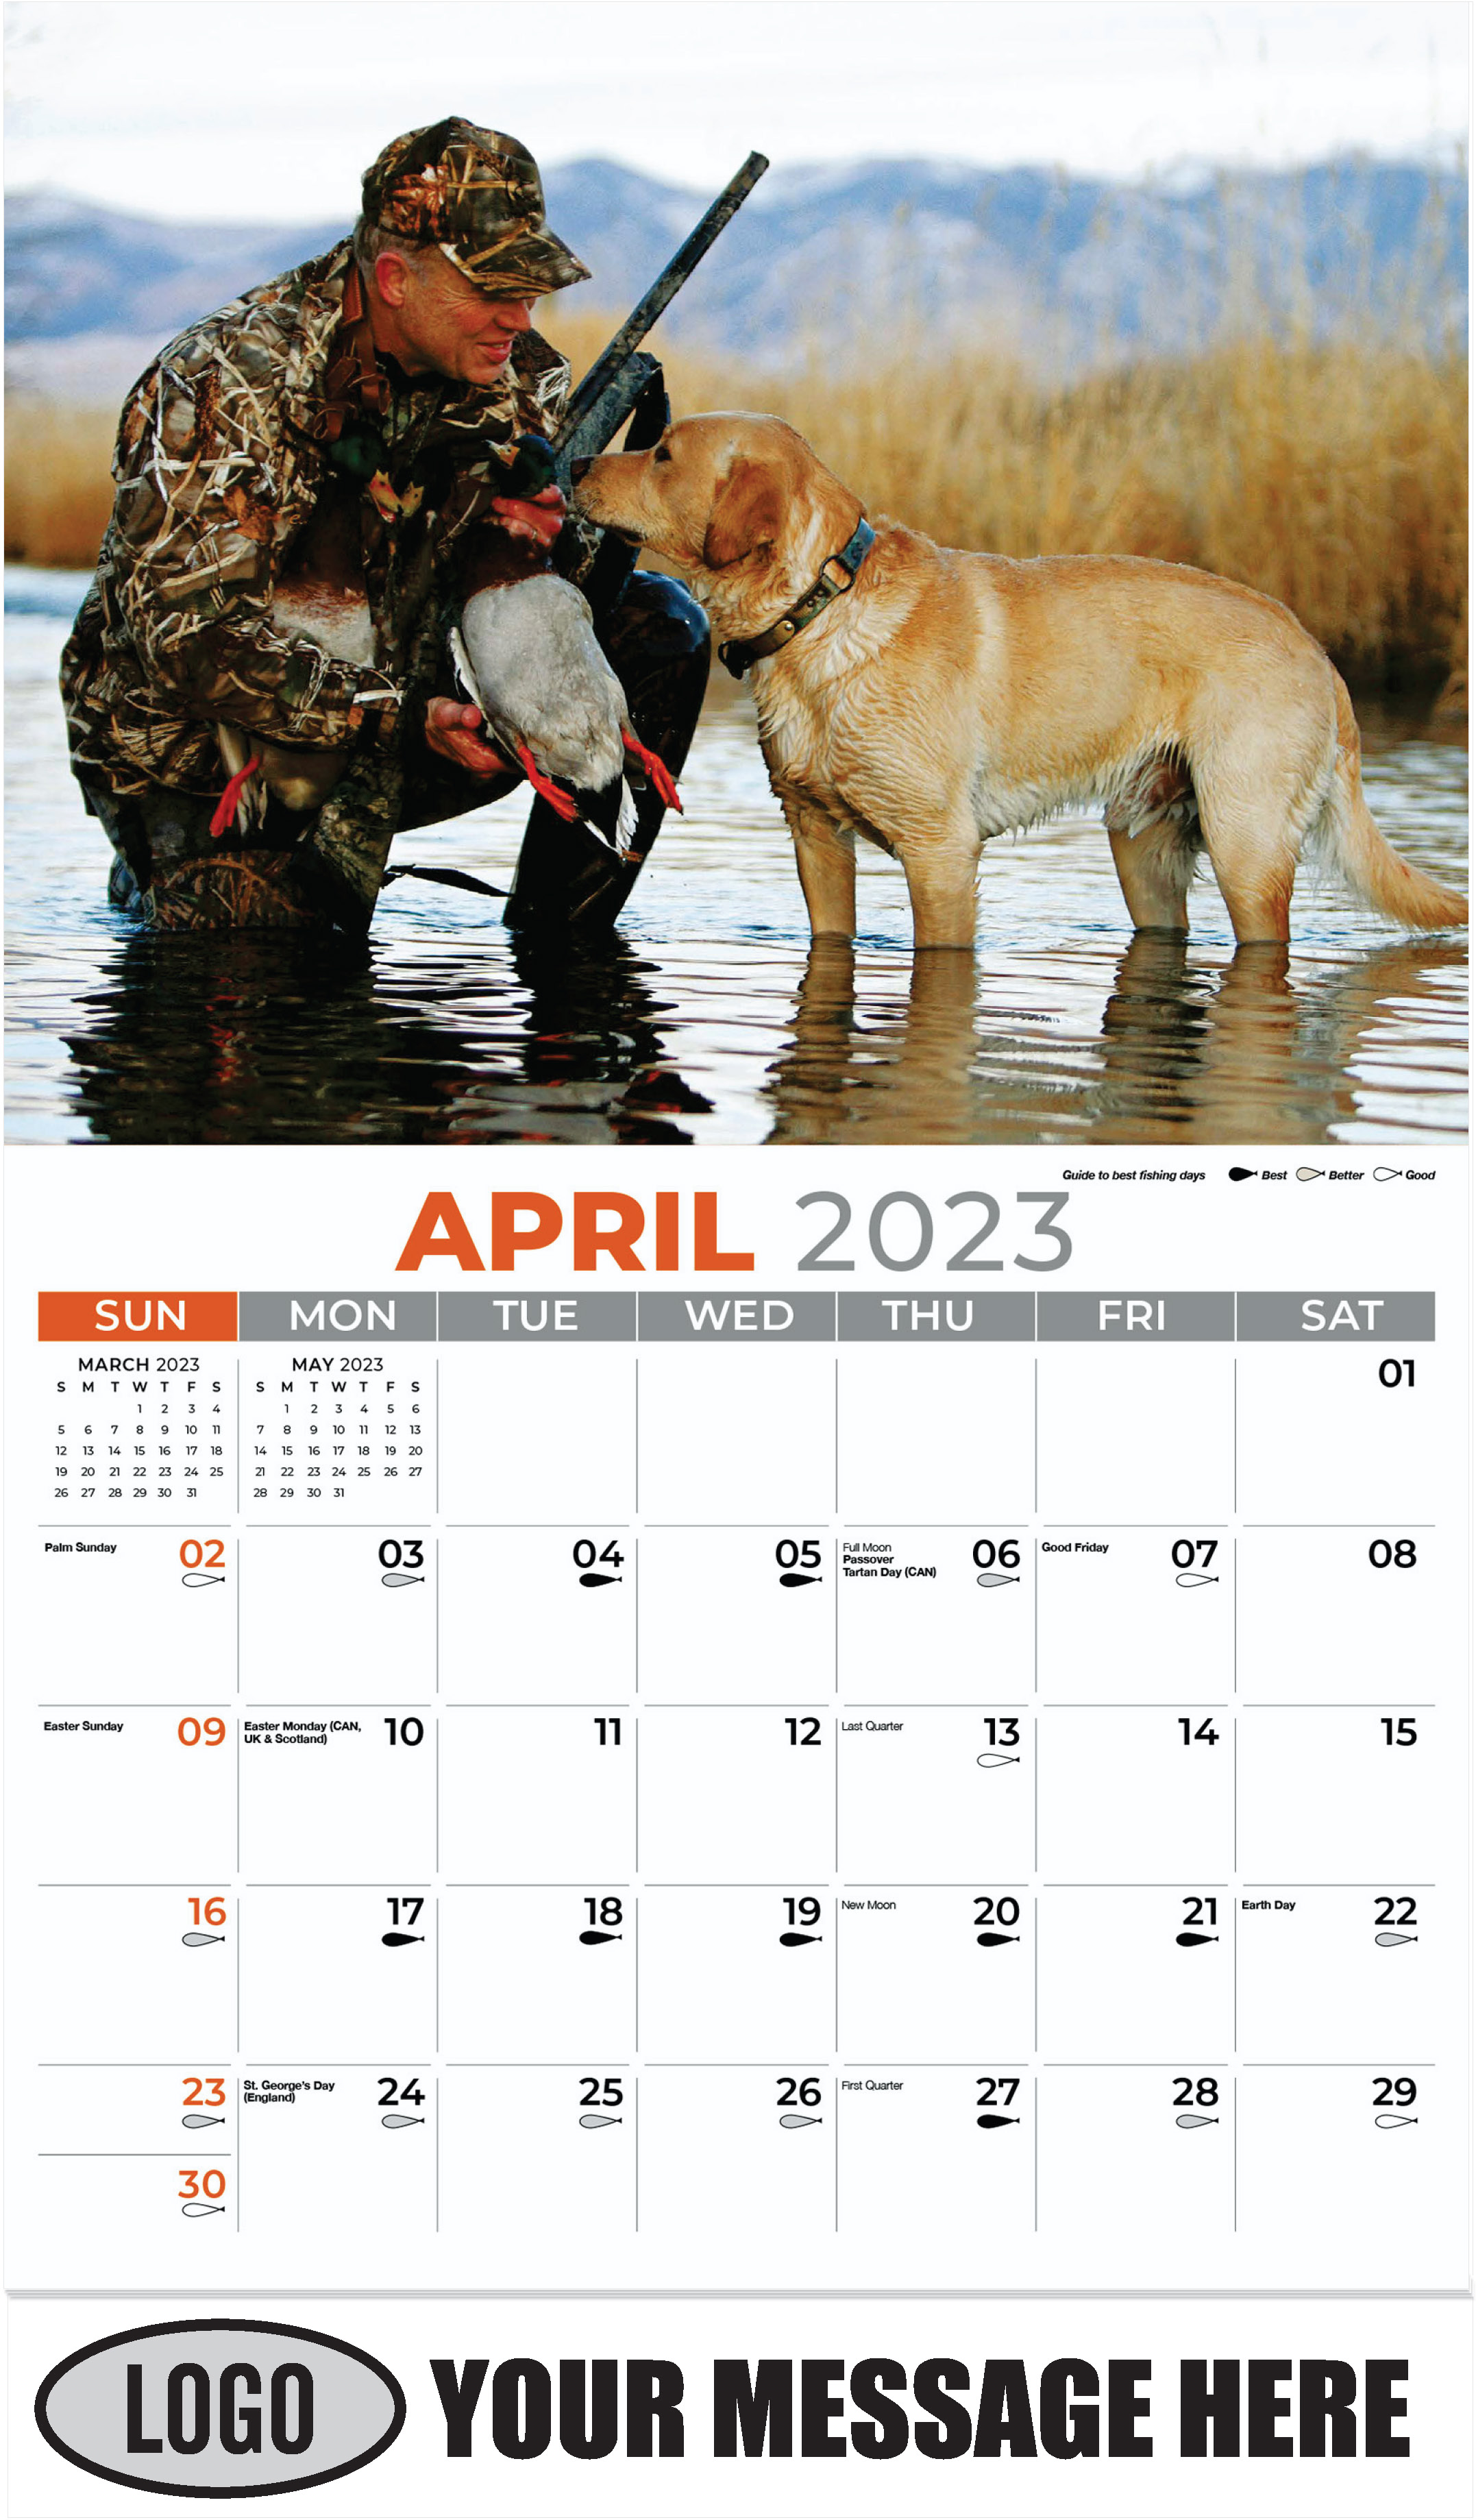 April - Fishing & Hunting 2023 Promotional Calendar